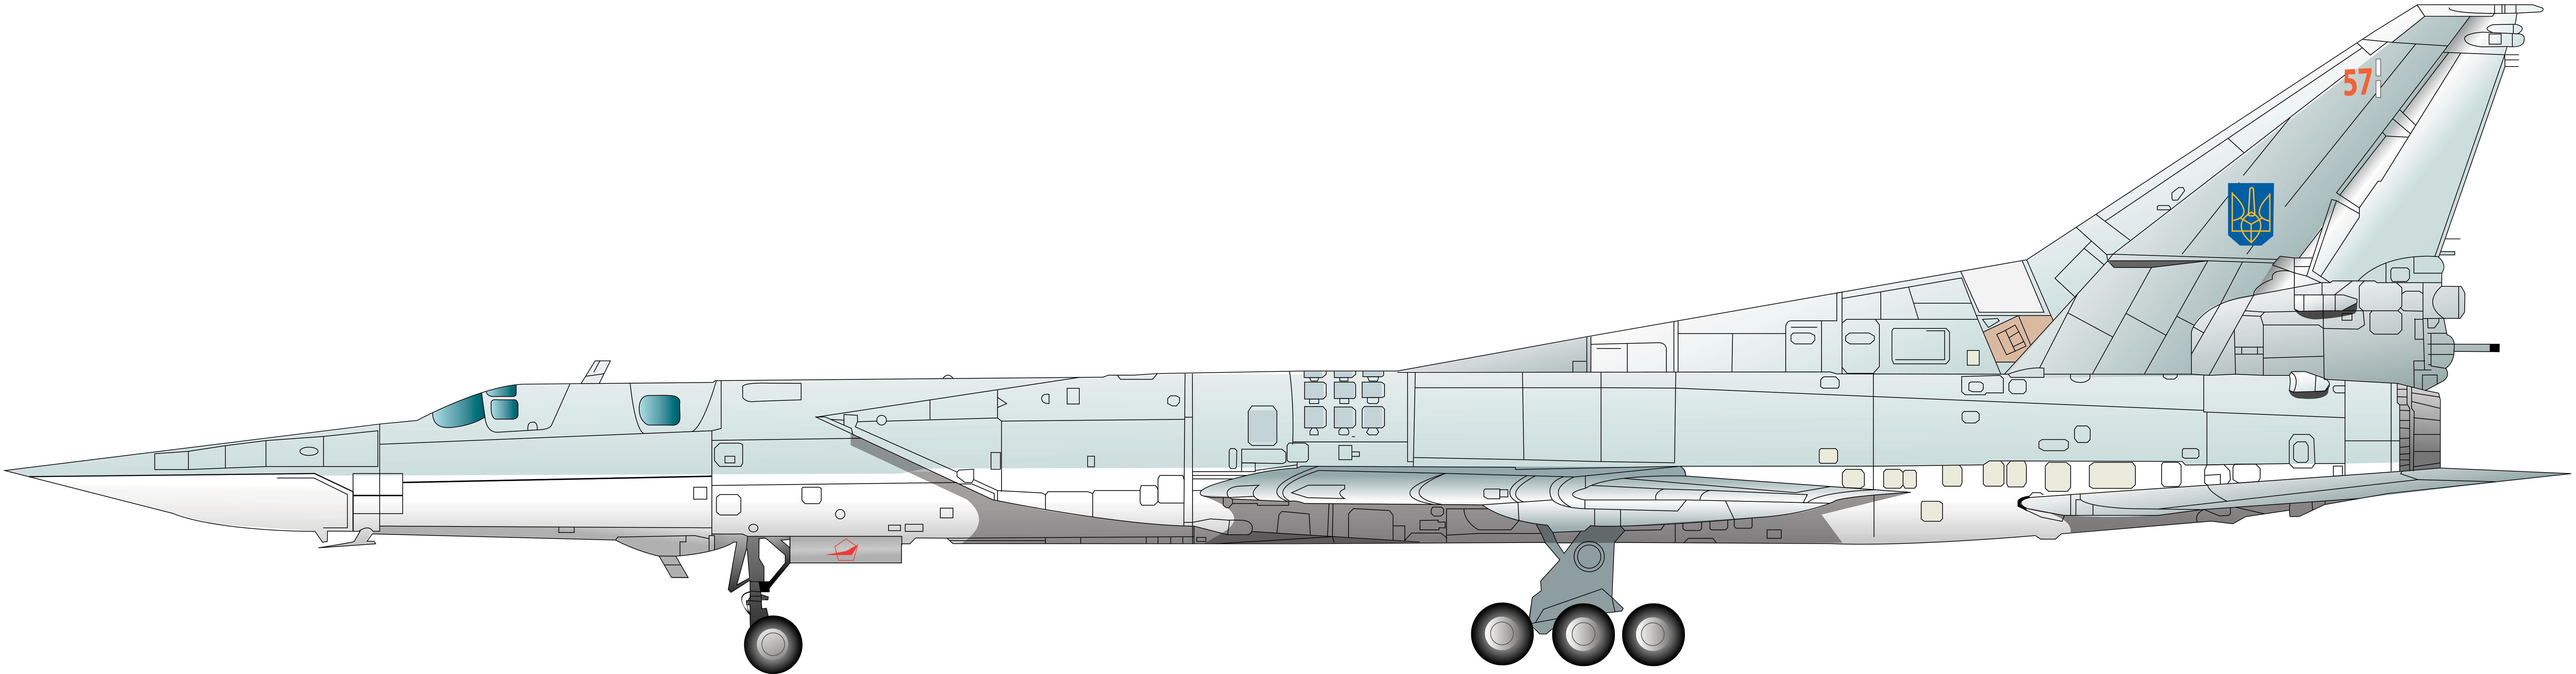 22 m 11 5. Ту-22m3. Шасси ту 22м3. Ту -22м3 киль. Ту-22м3 сверхзвуковой самолёт.